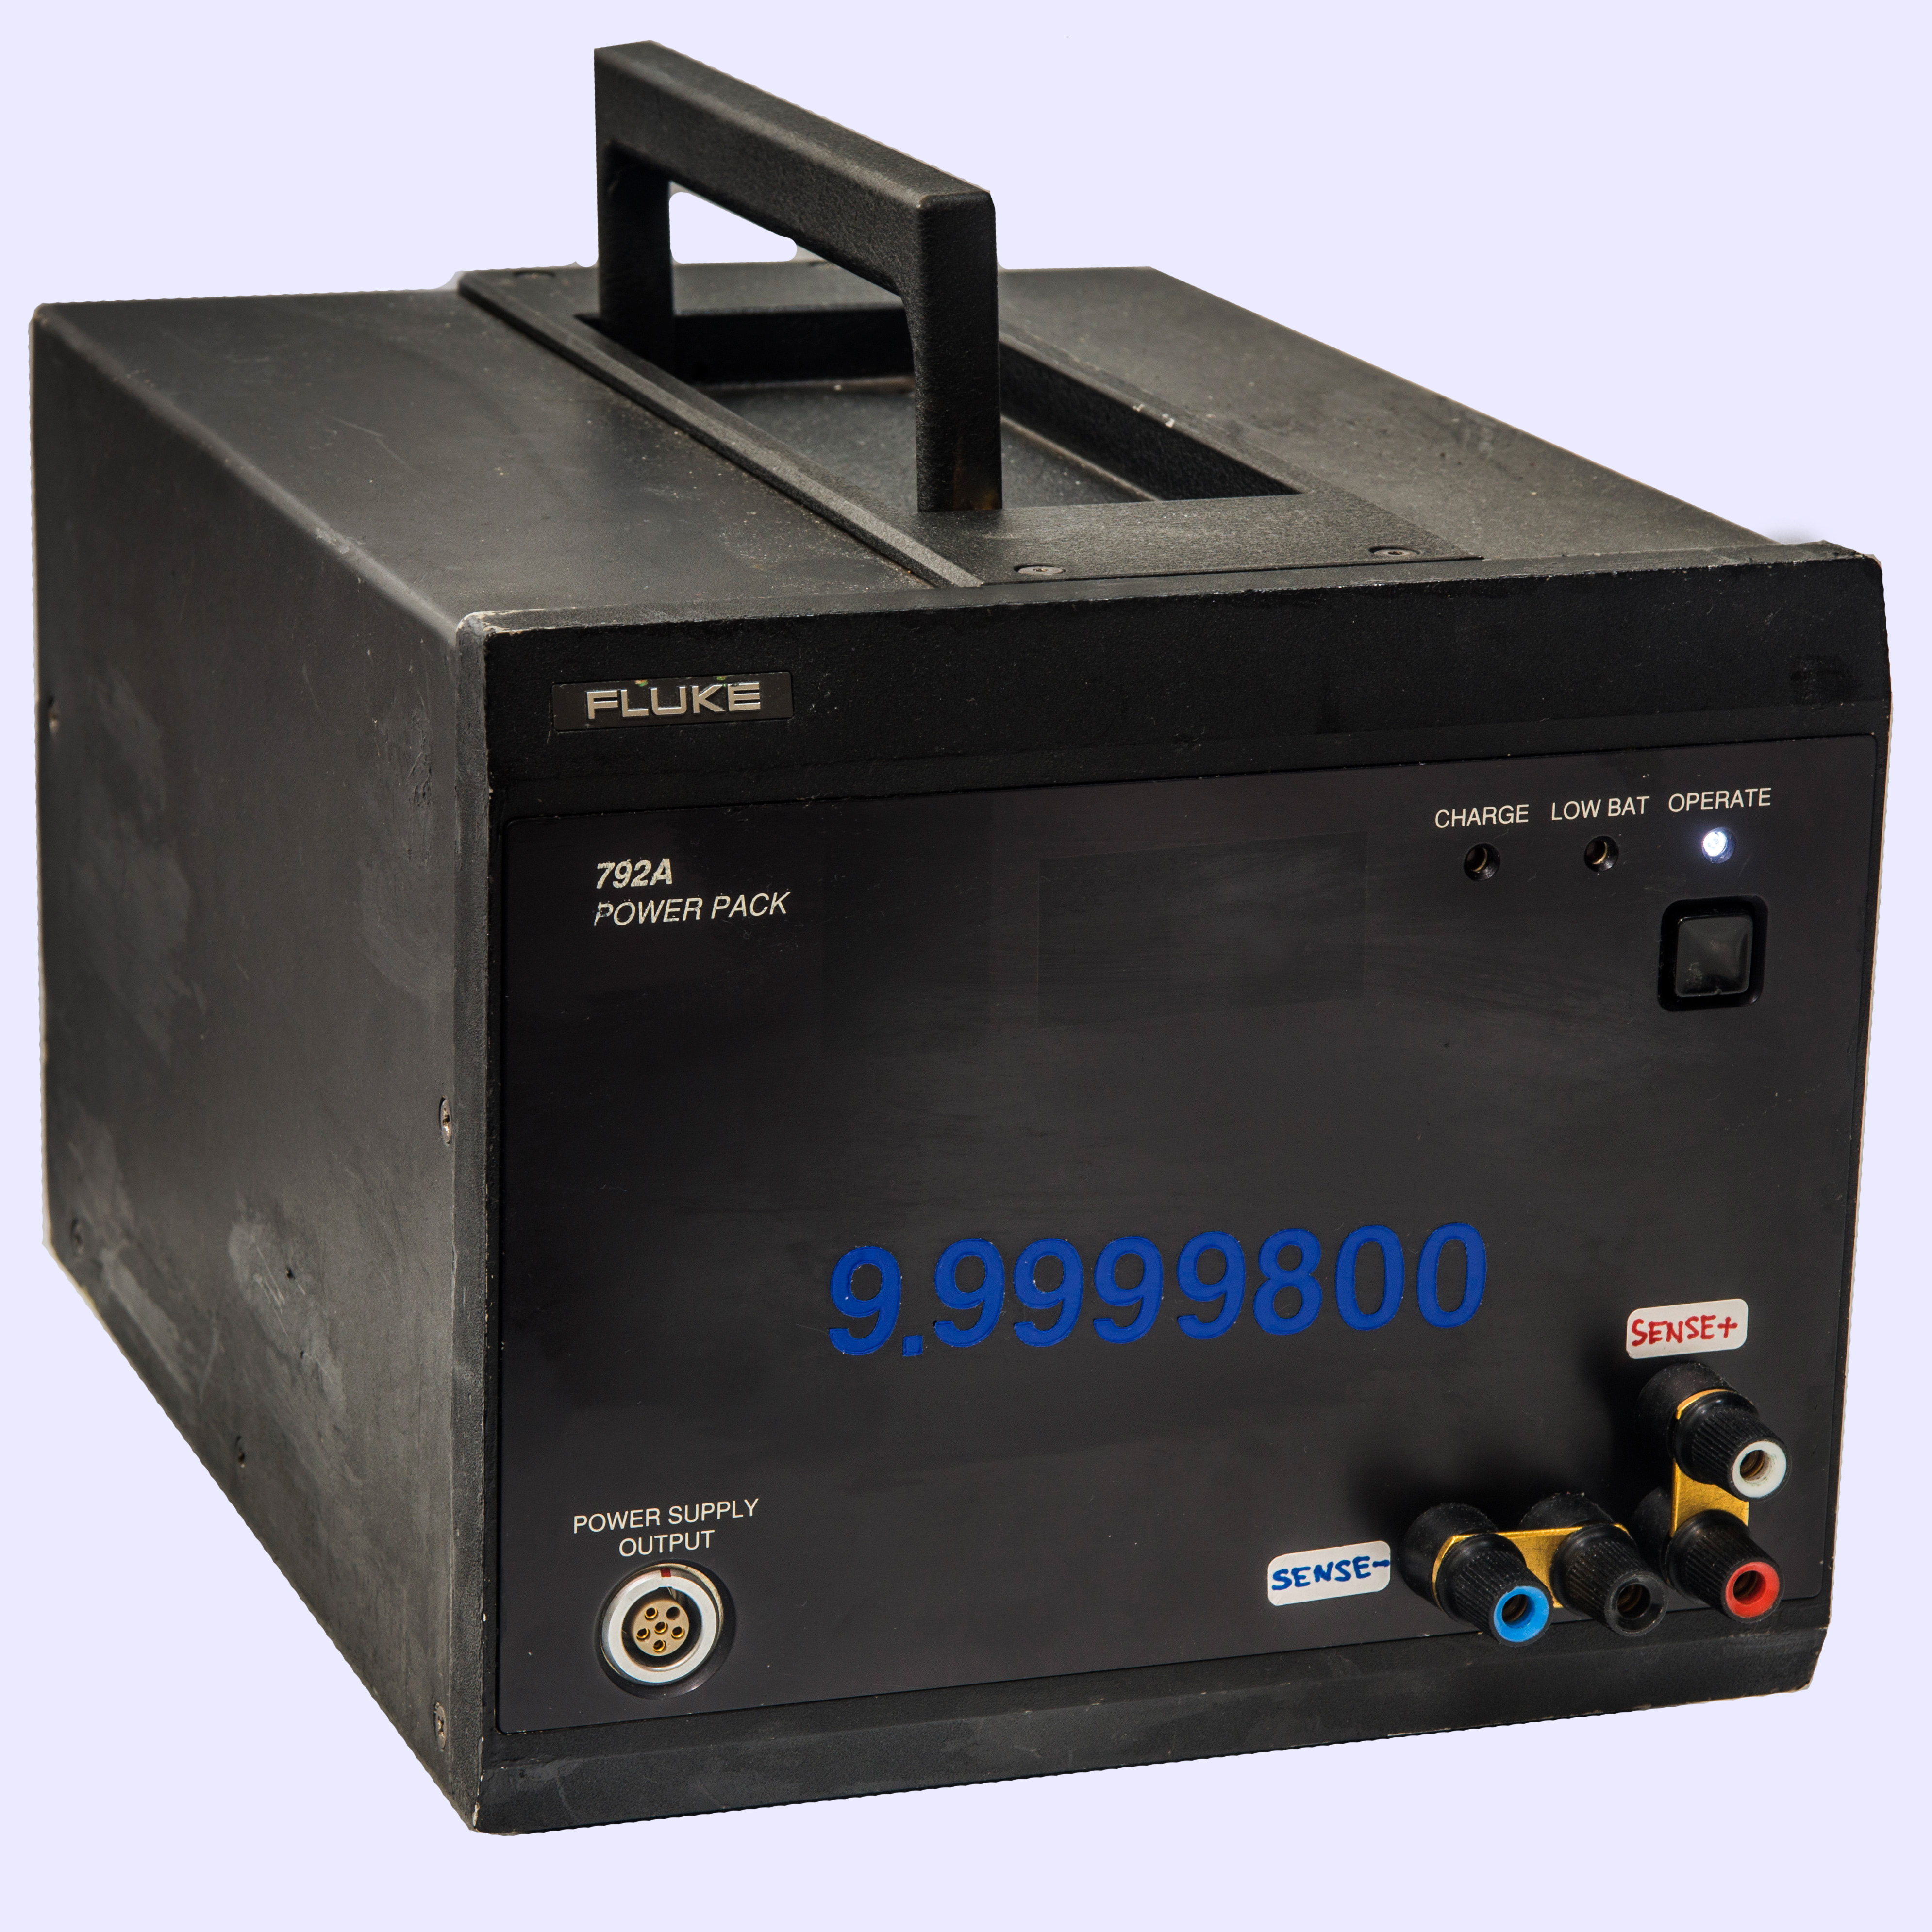 FLUKE 5205A Precision Power Amplifier Manual Instruction Operating + Service 